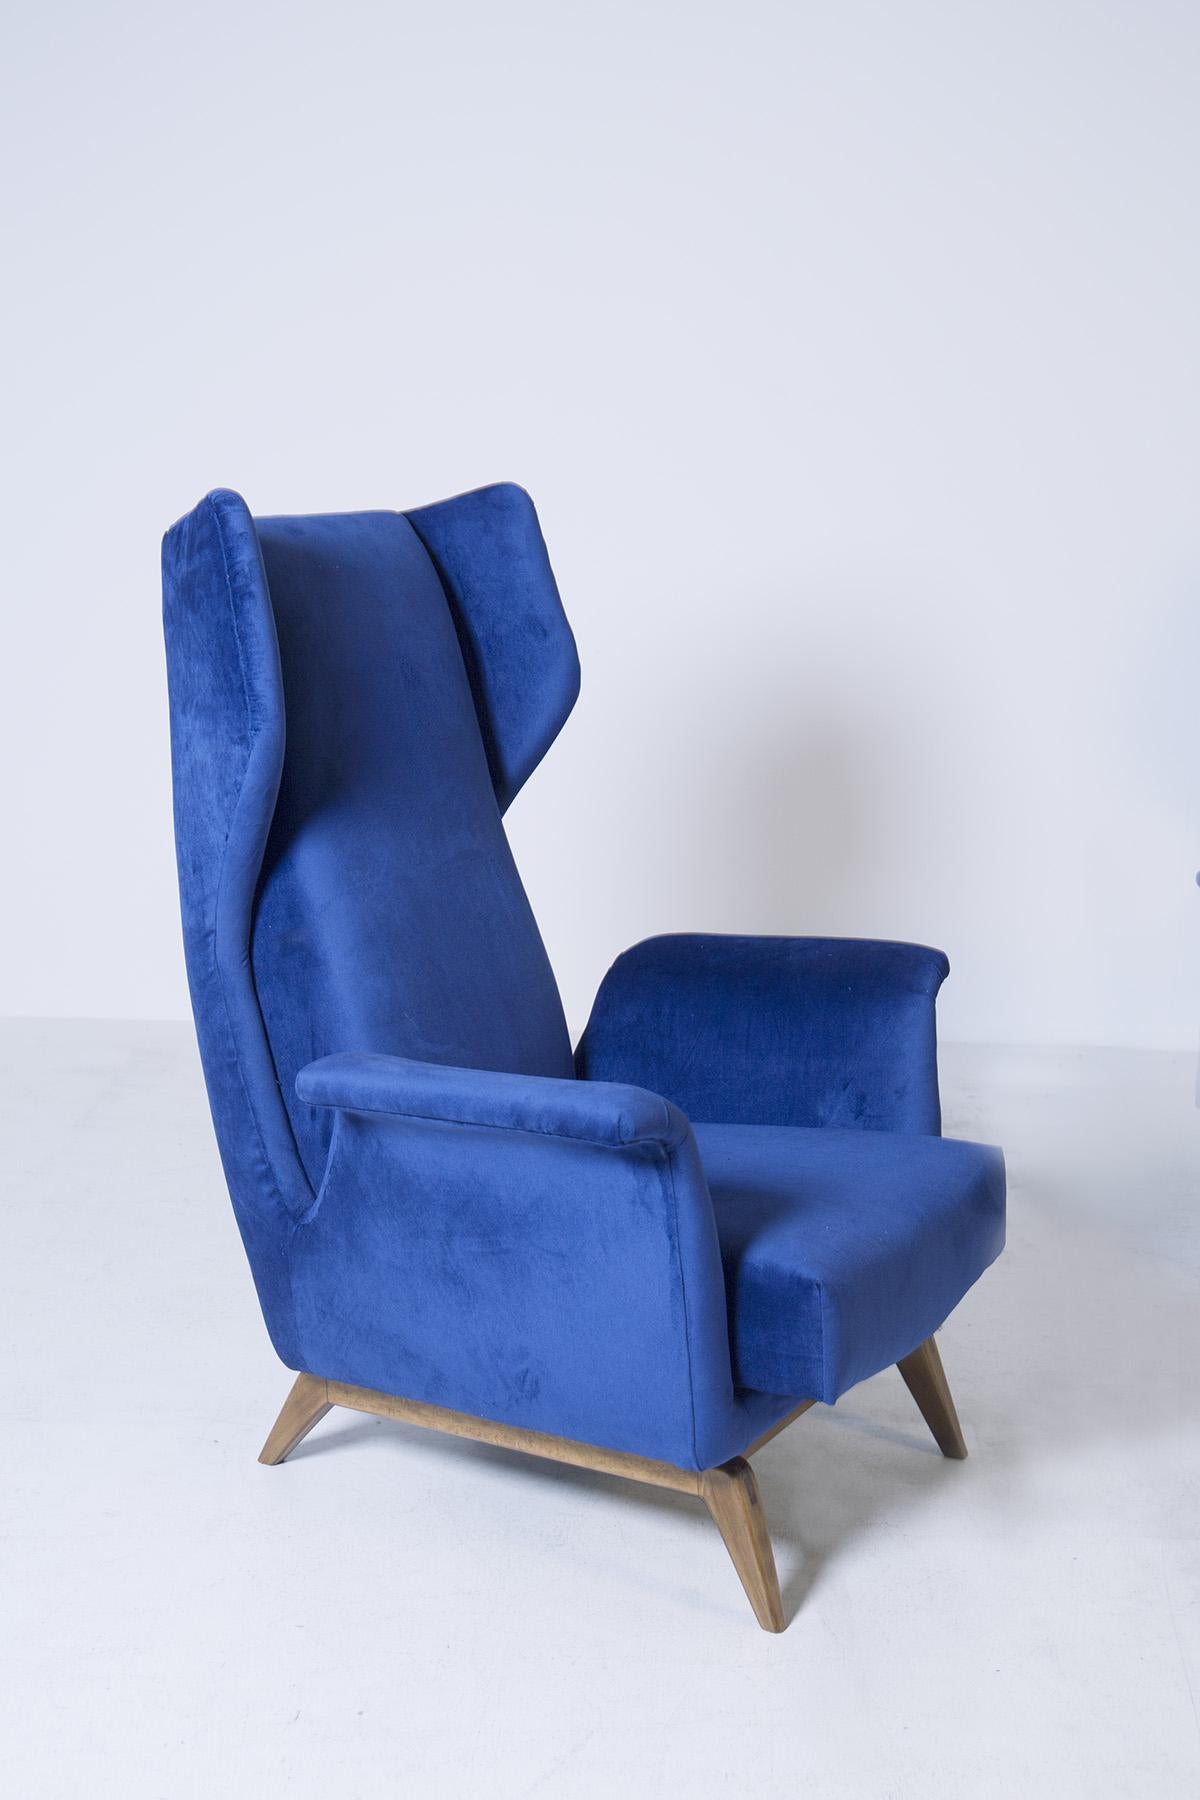 Mid-Century Modern Pair of Italian Armchairs by Cassina in Blue Velvet, 1950s